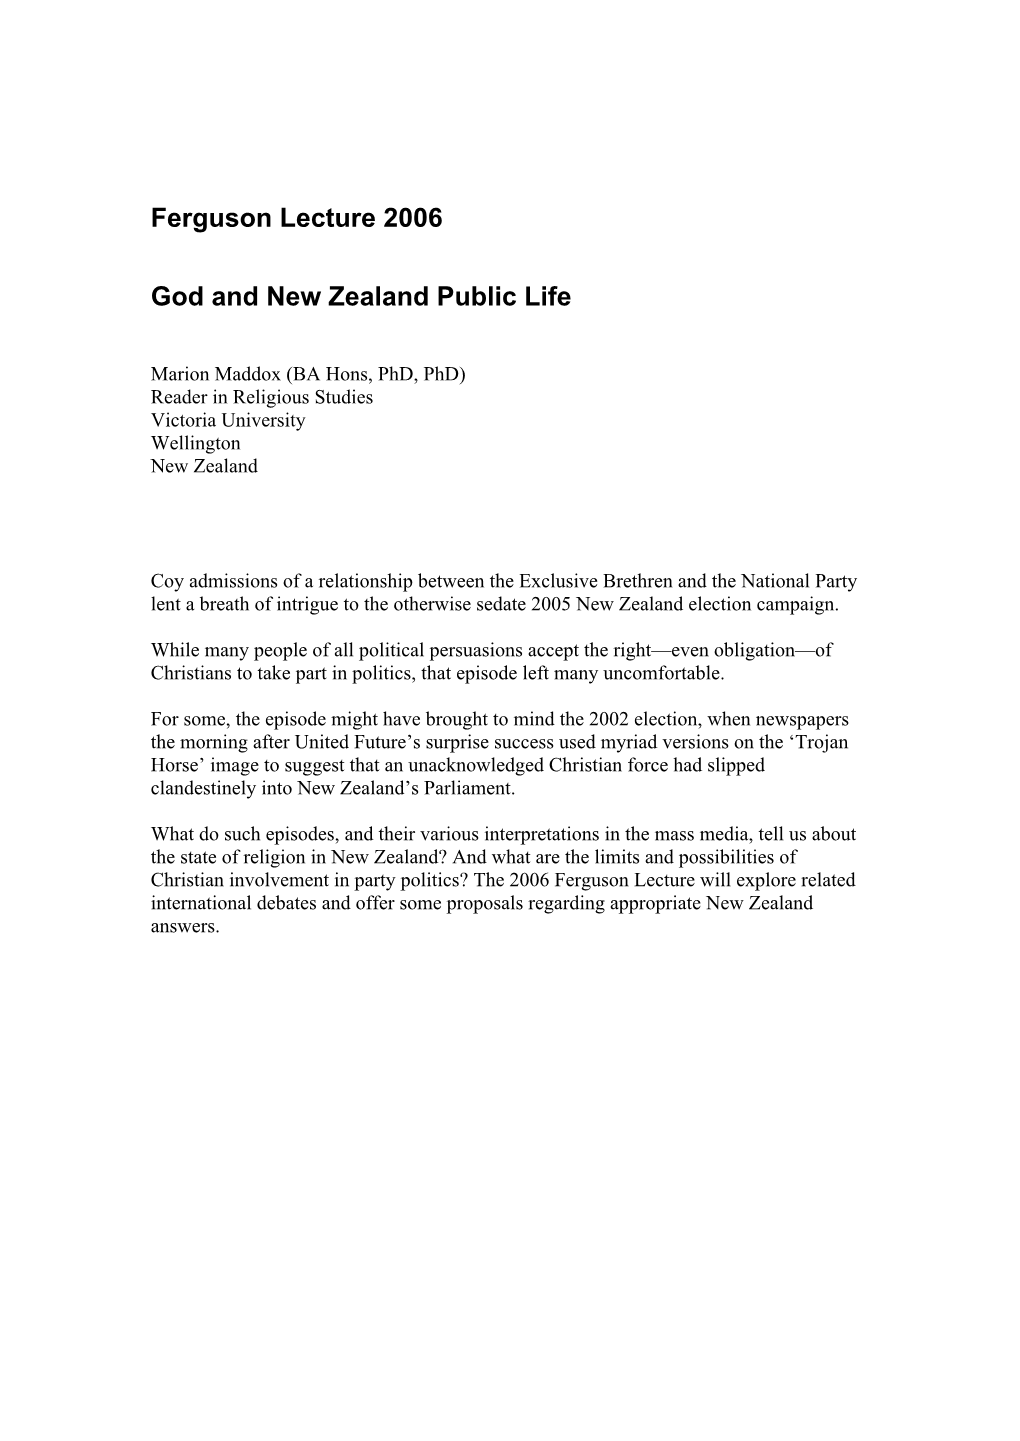 Ferguson Lecture 2006 God and New Zealand Public Life